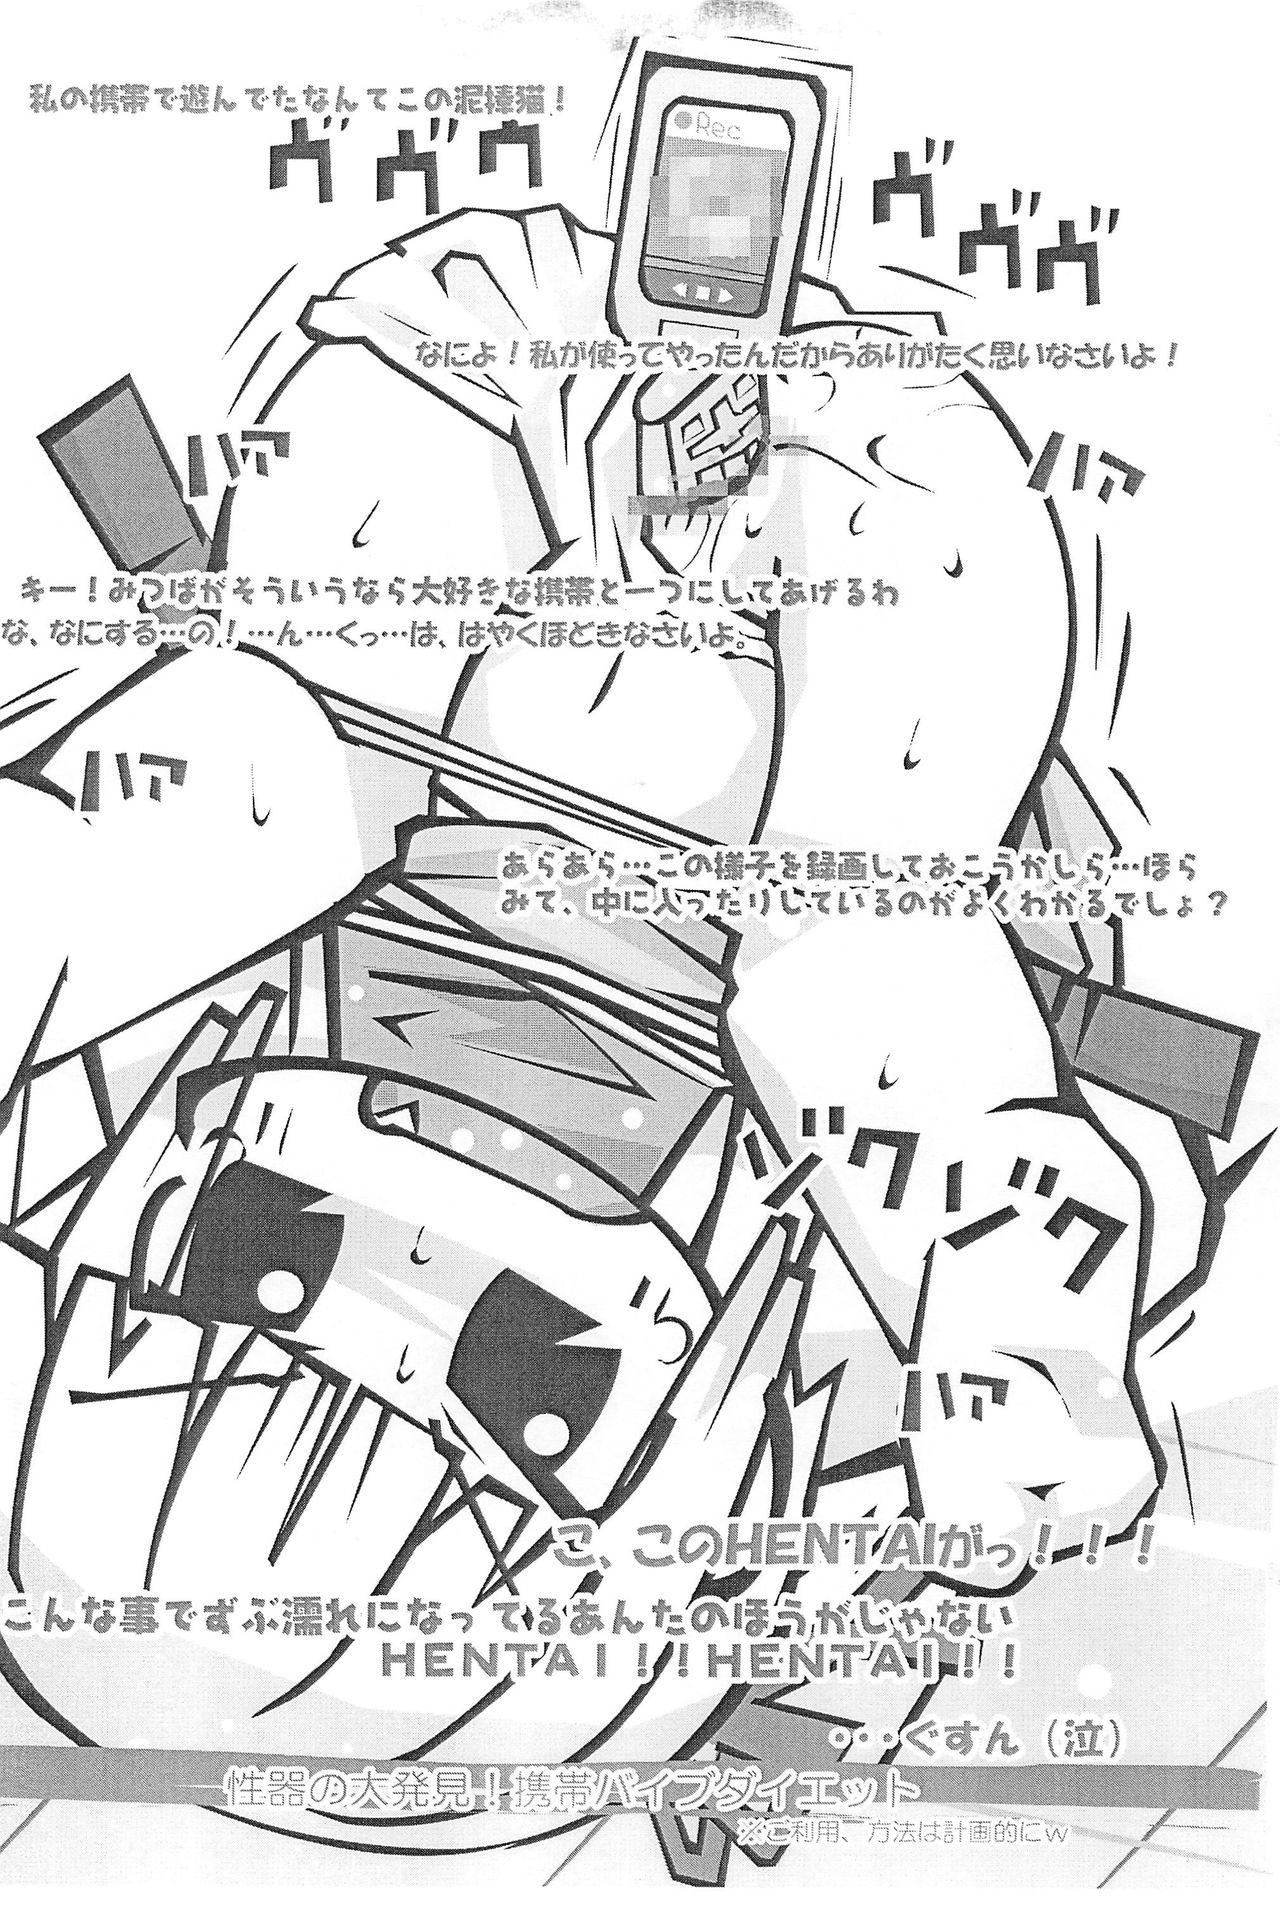 Great Fuck Honiki-Hentai 6 no 3 - Mitsudomoe Piercing - Page 9